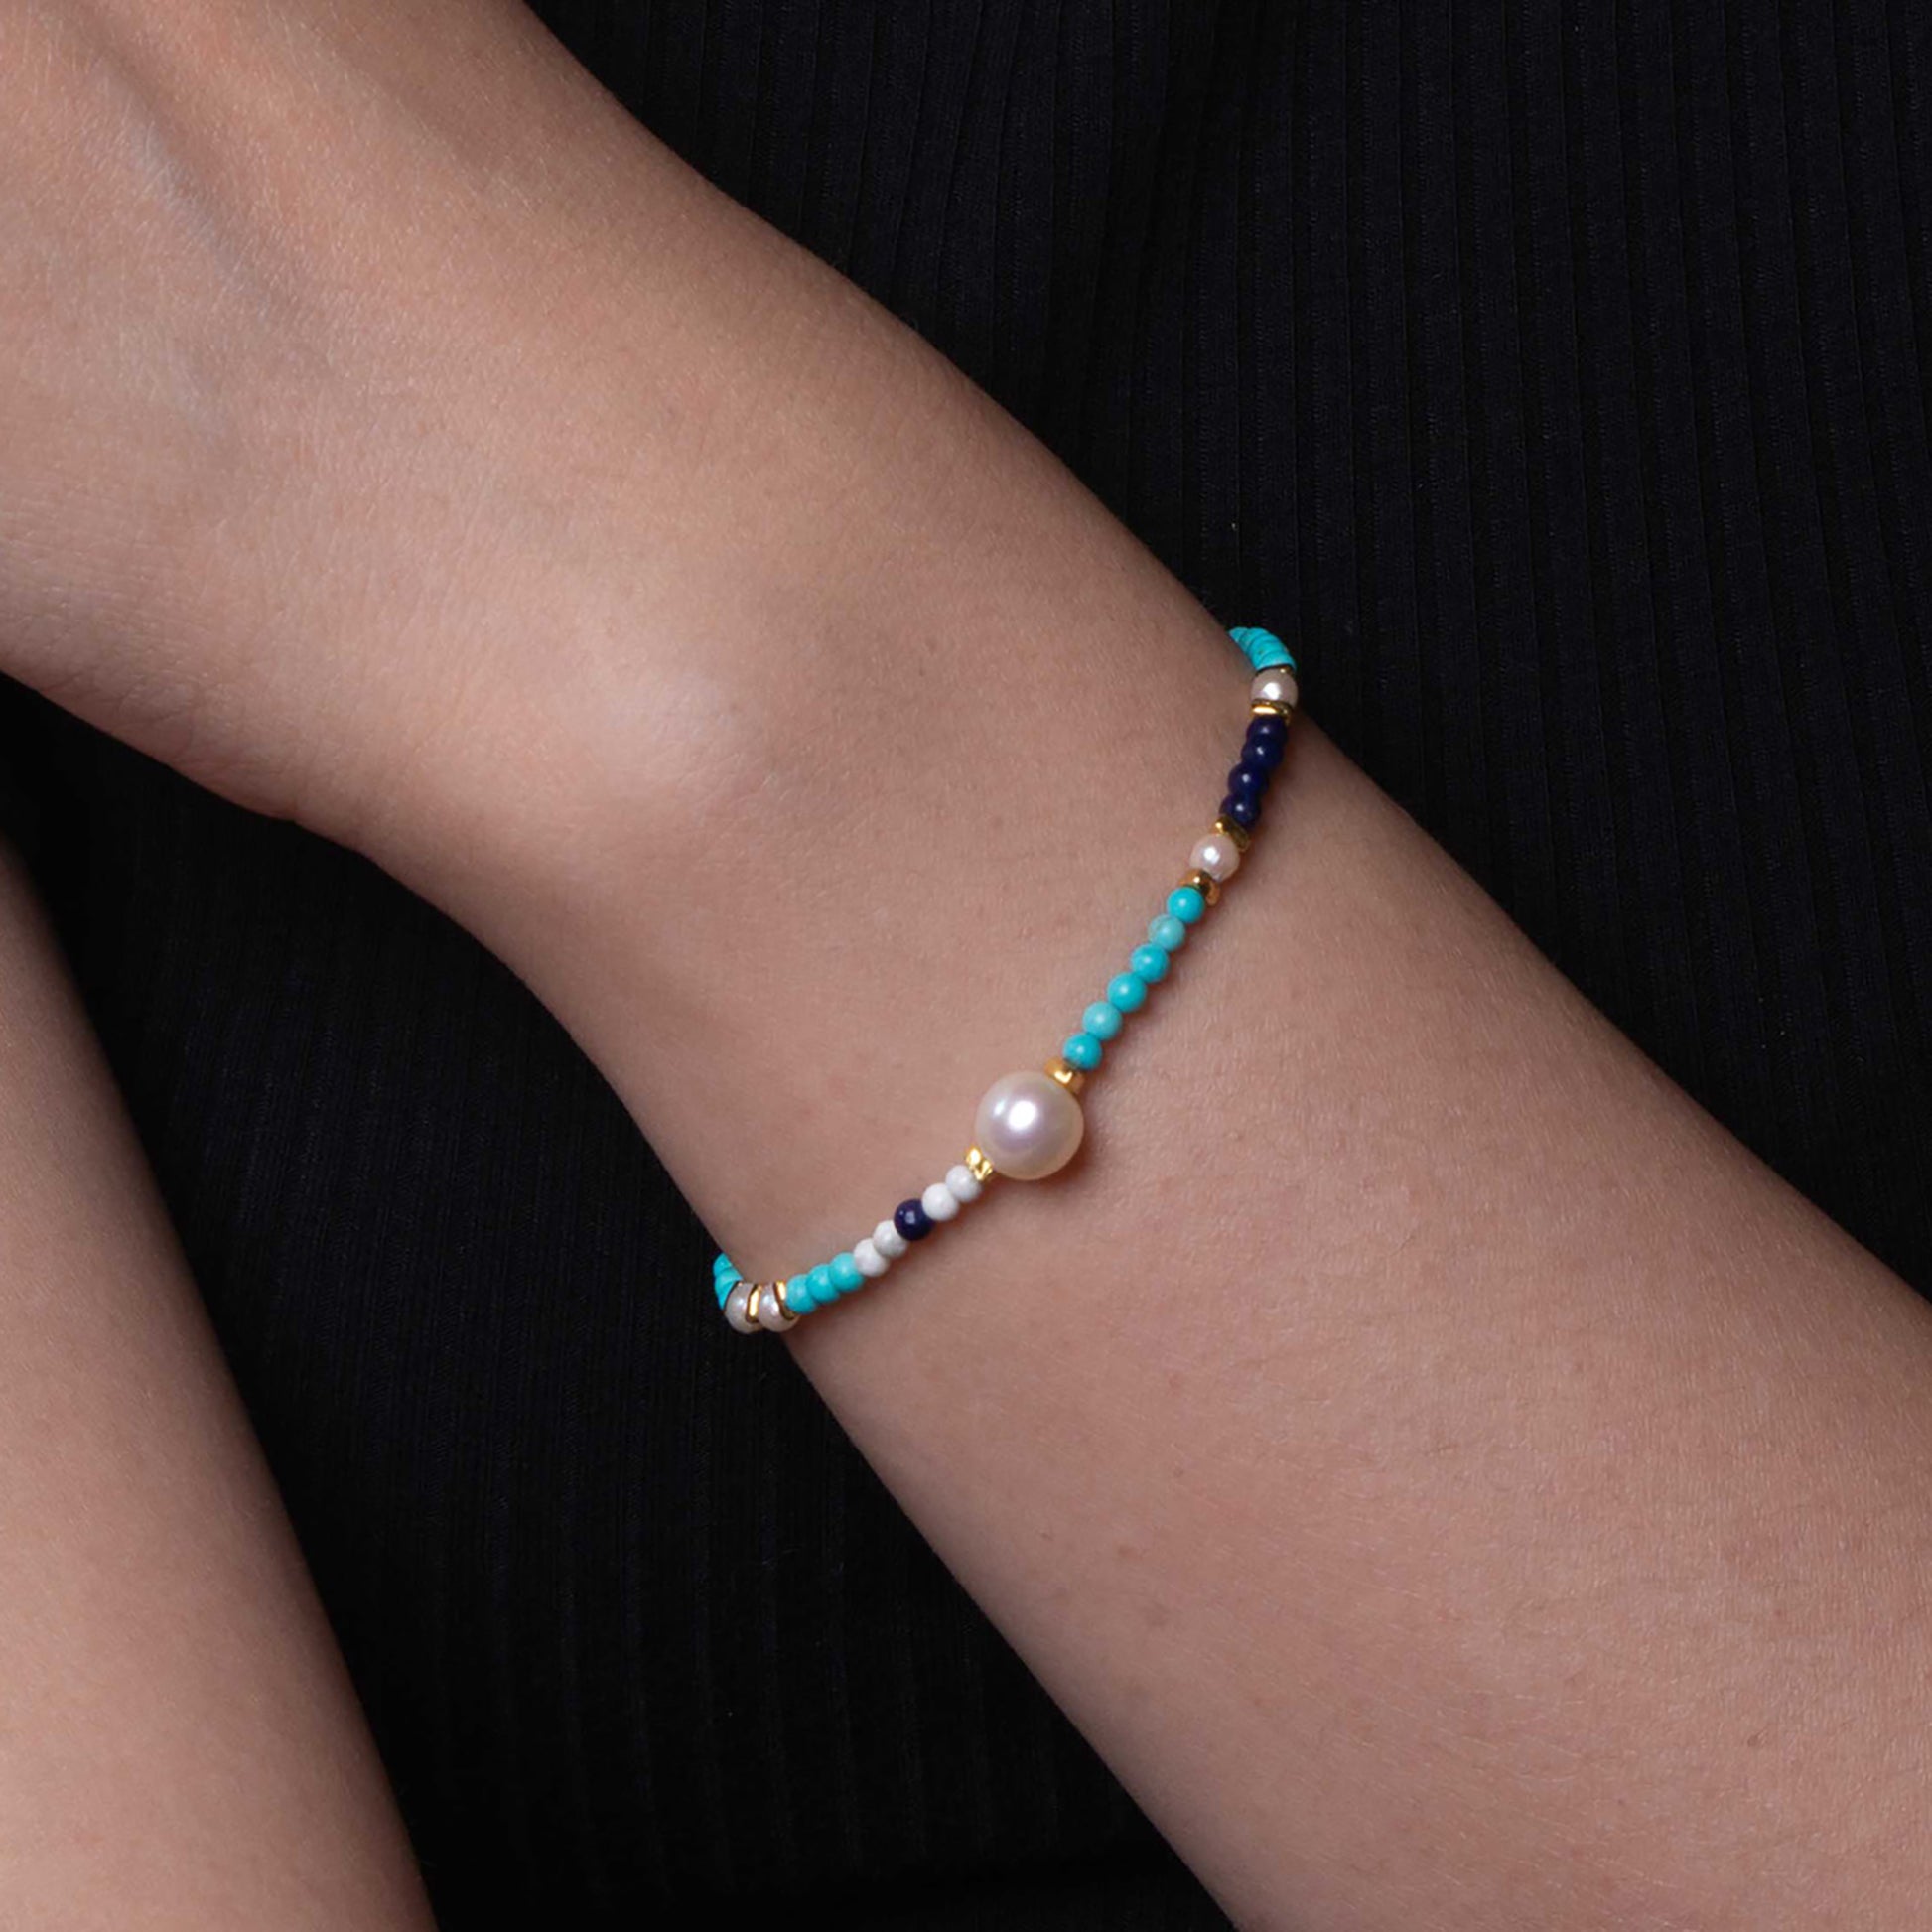 Pearl, Turquoise and Lapis lazuli Bracelet